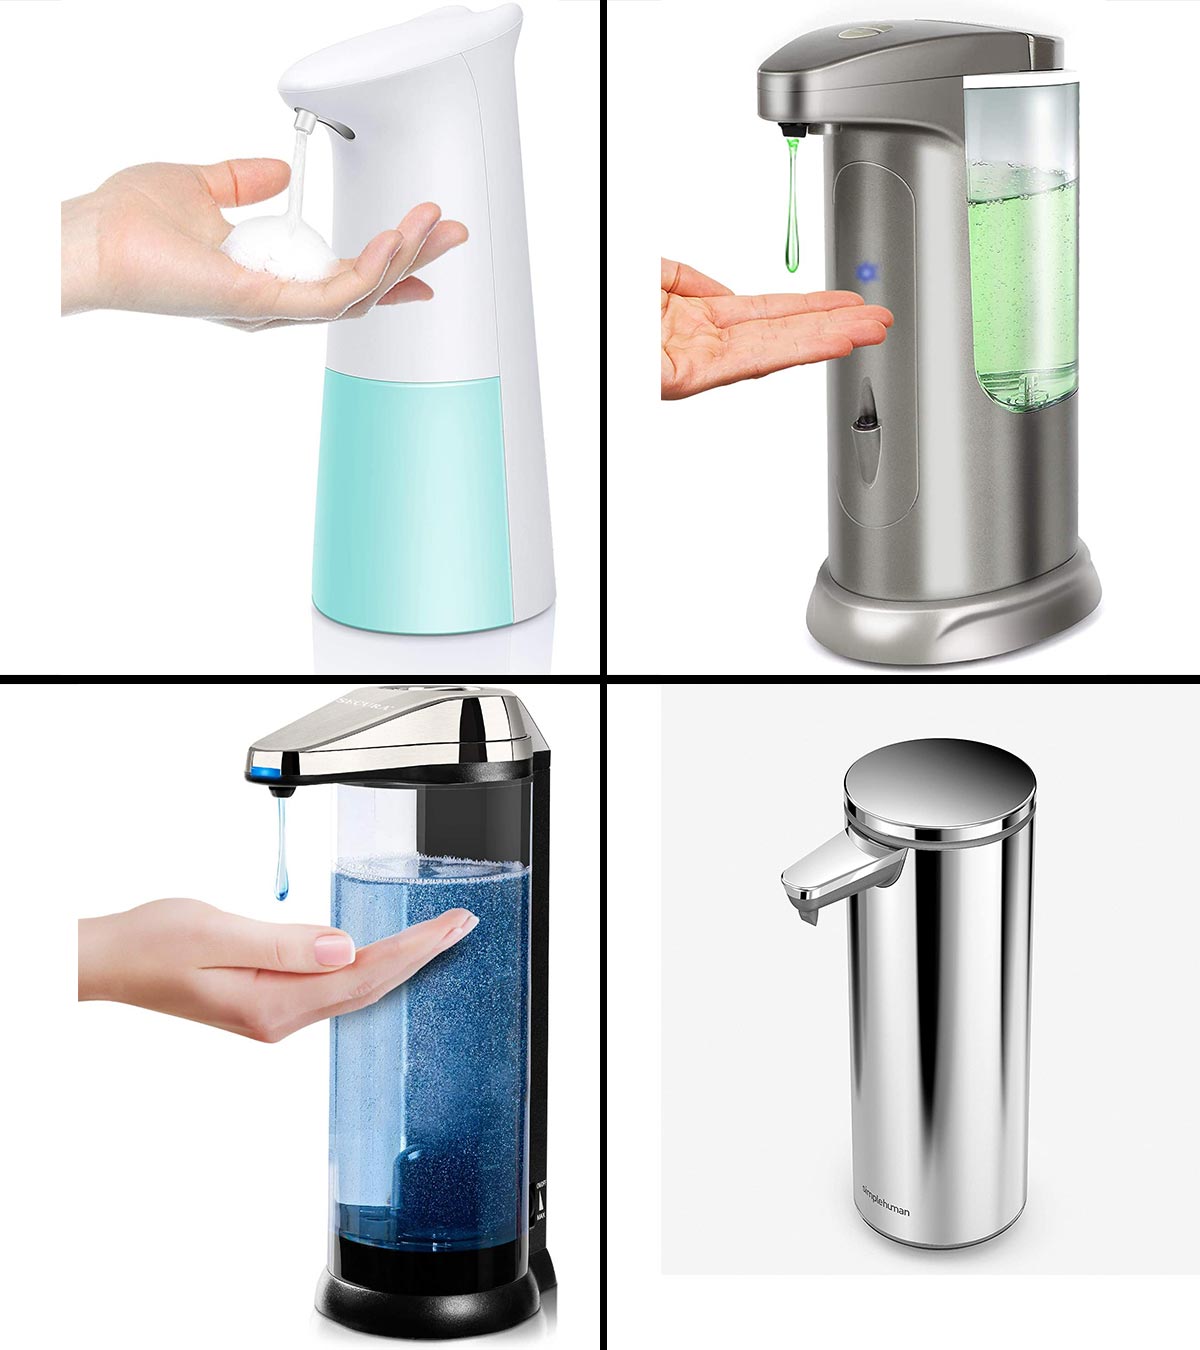 https://www.momjunction.com/wp-content/uploads/2021/08/15-Best-Automatic-Soap-Dispensers-In-2021-1-1.jpg